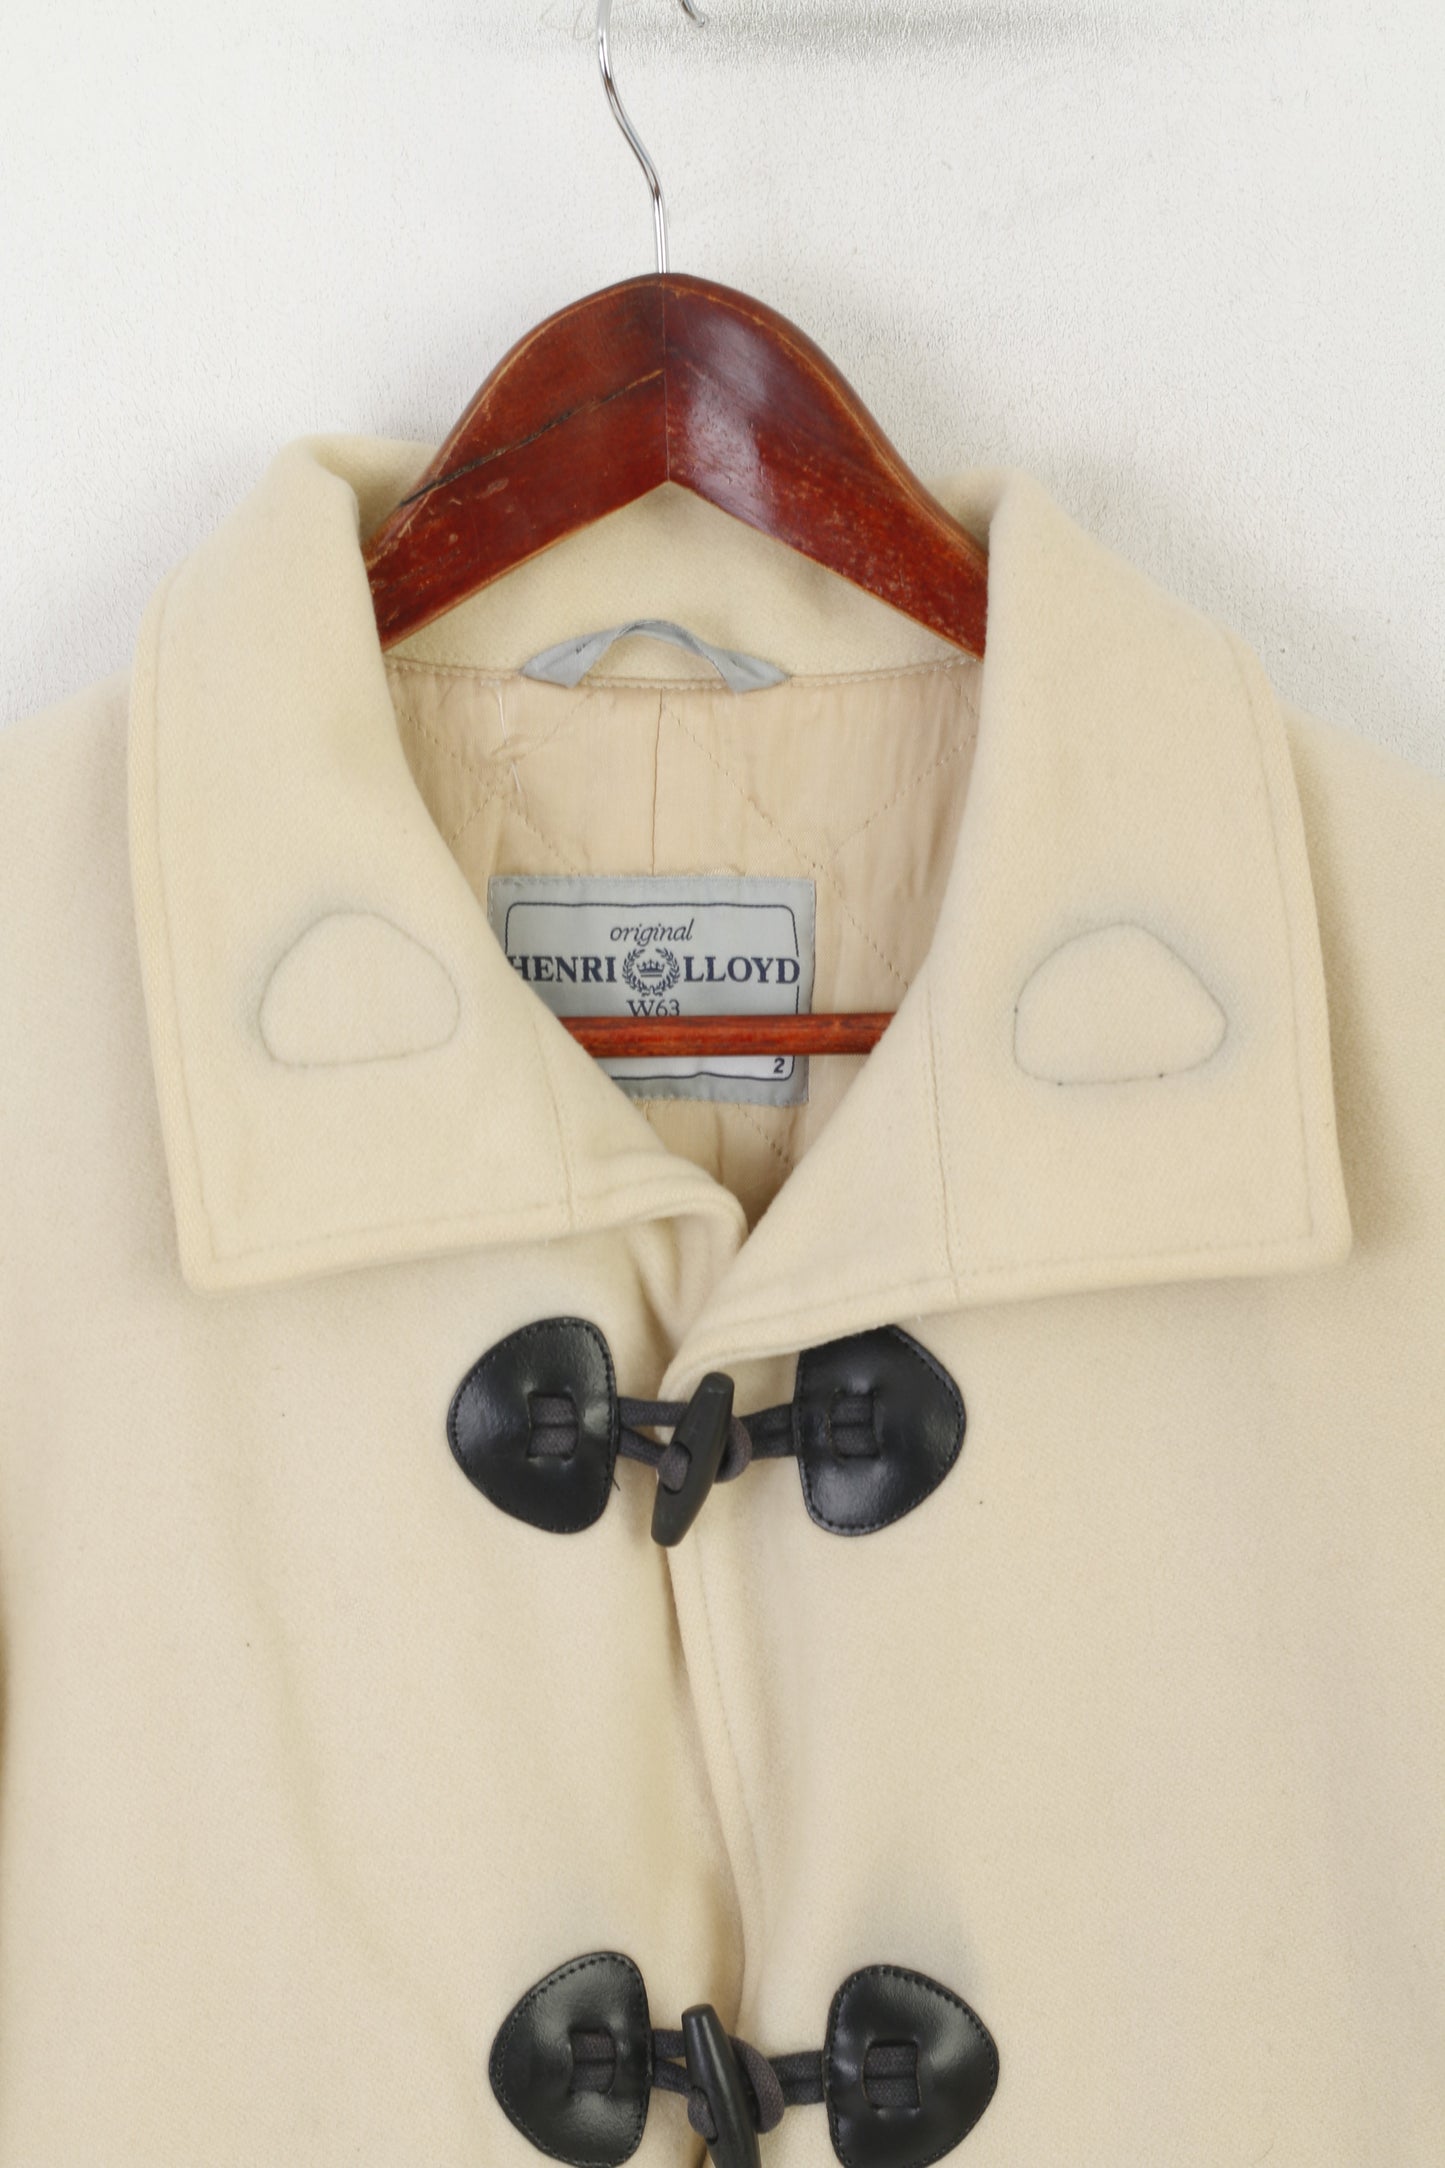 Henri Lloyd Duffel Jacket da donna 2 S Cappotto classico vintage in lana beige